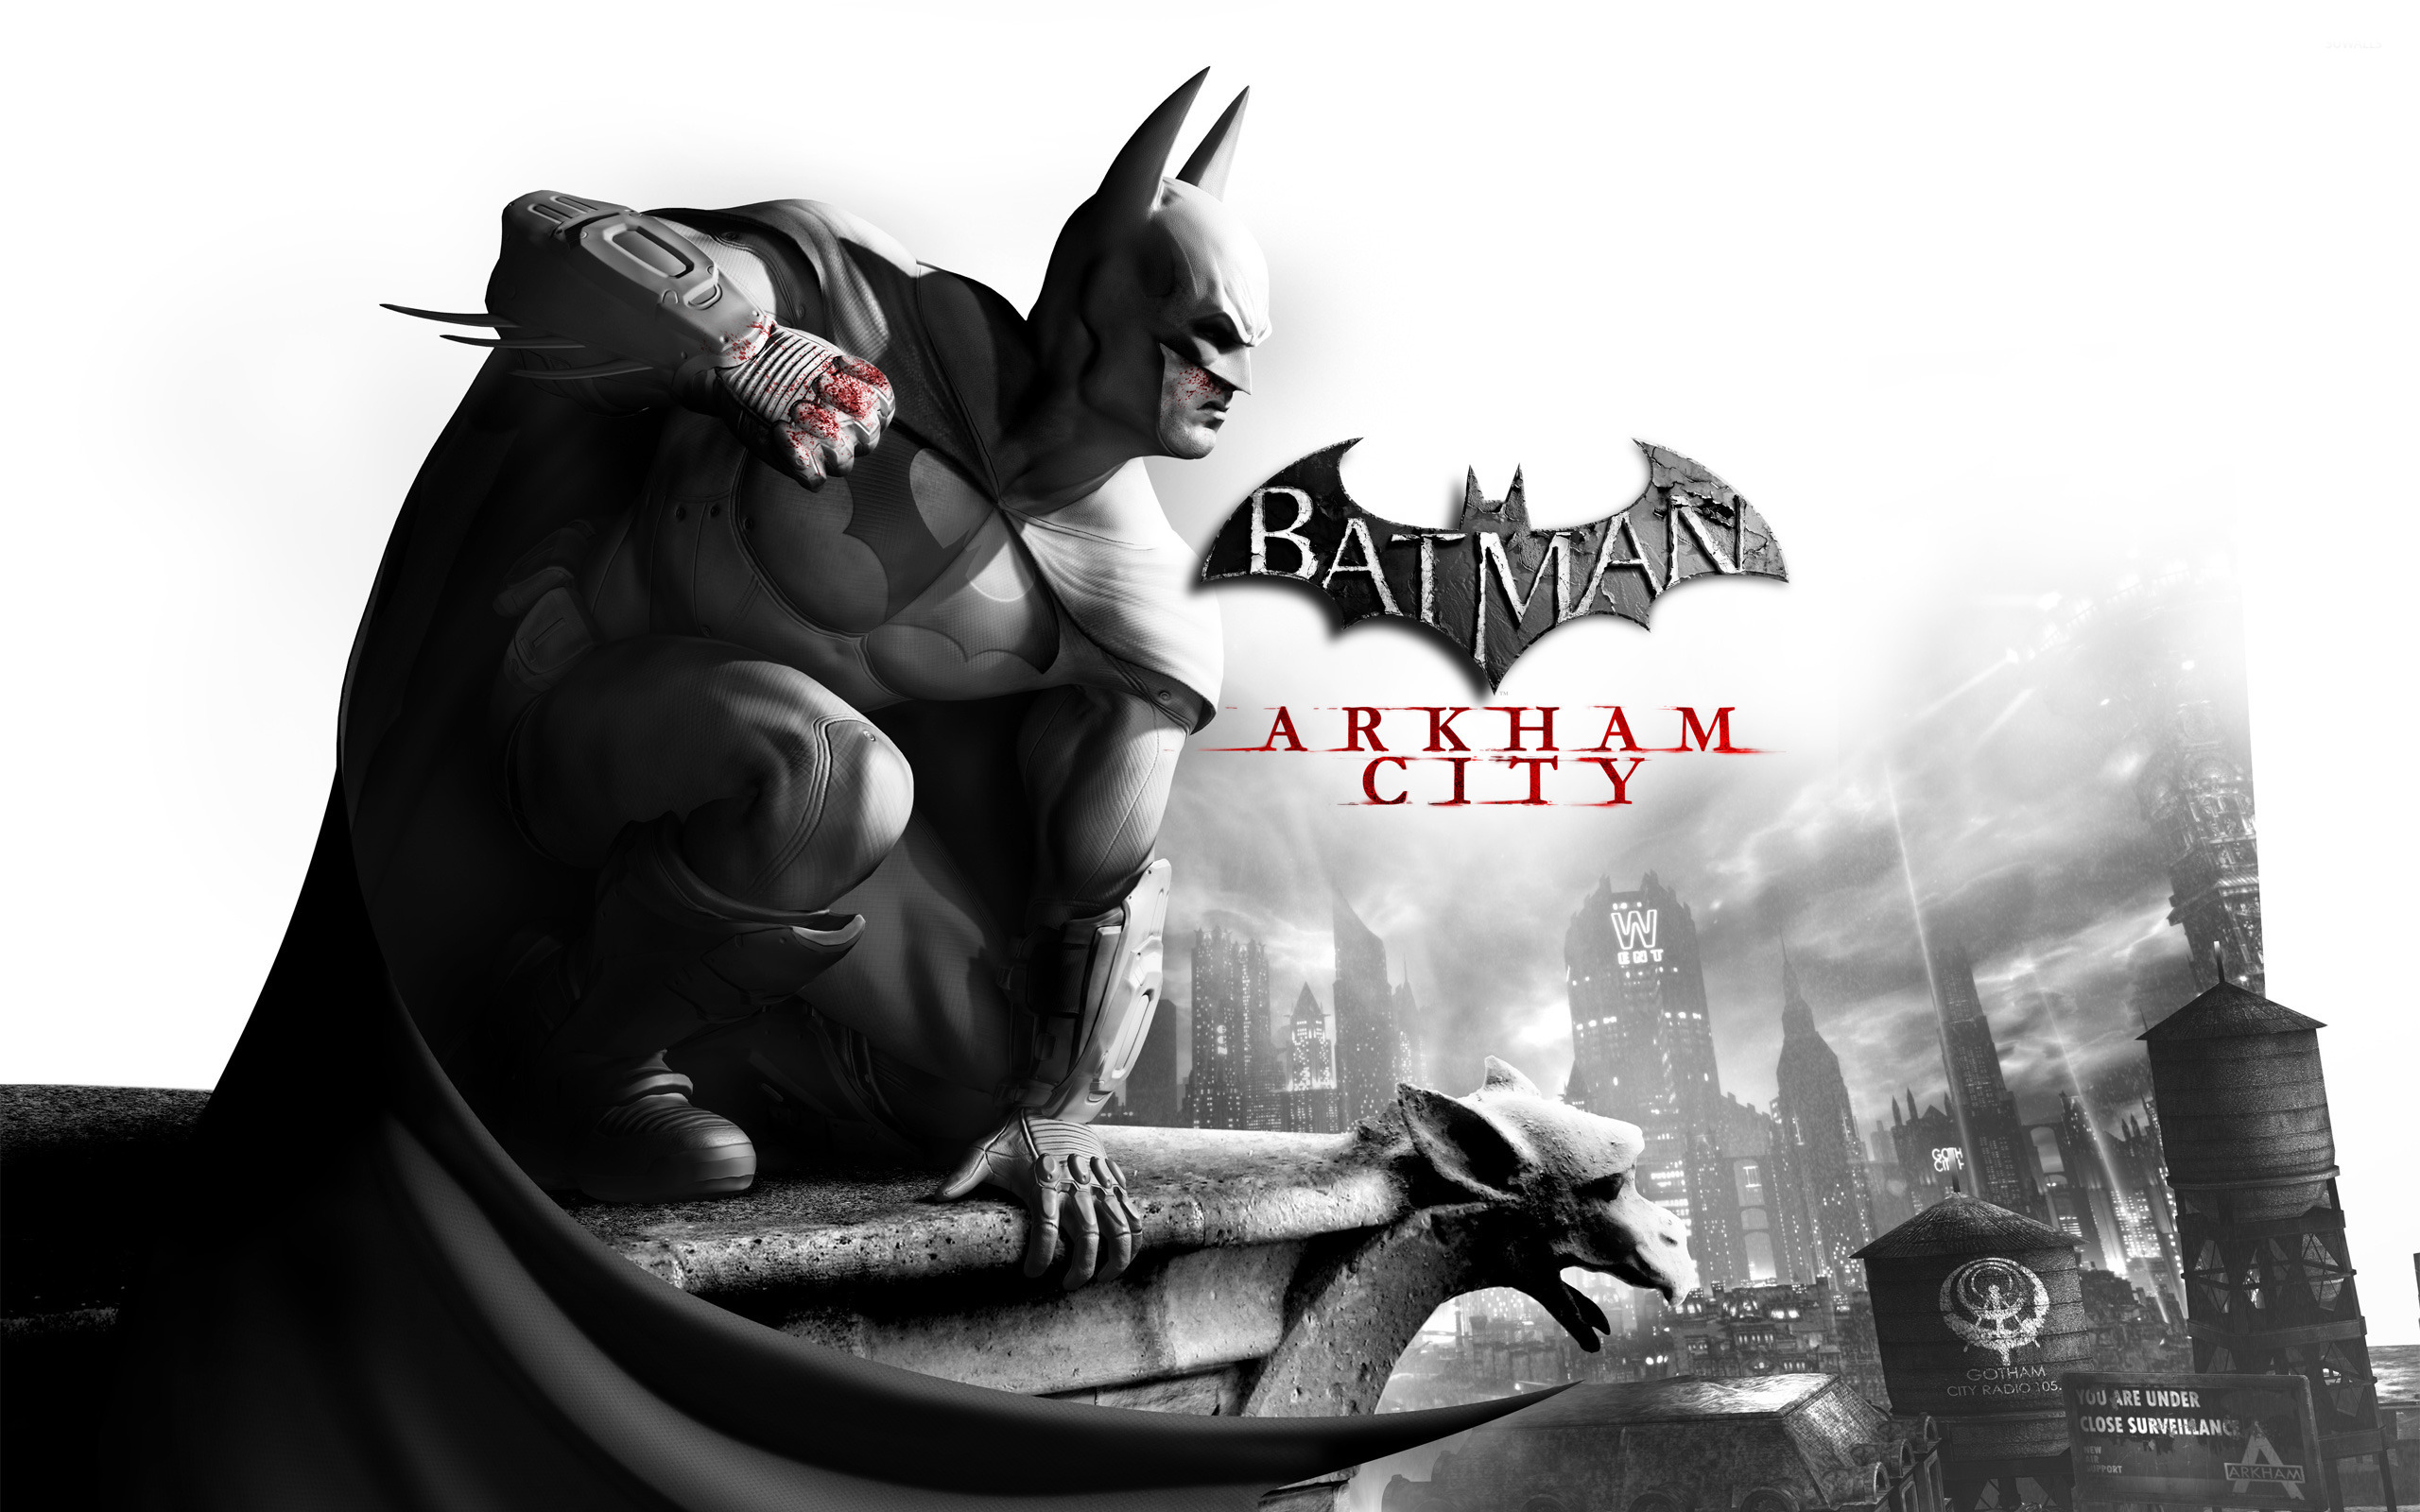 Batman Arkham City wallpaper   Game wallpapers   11422 2560x1600